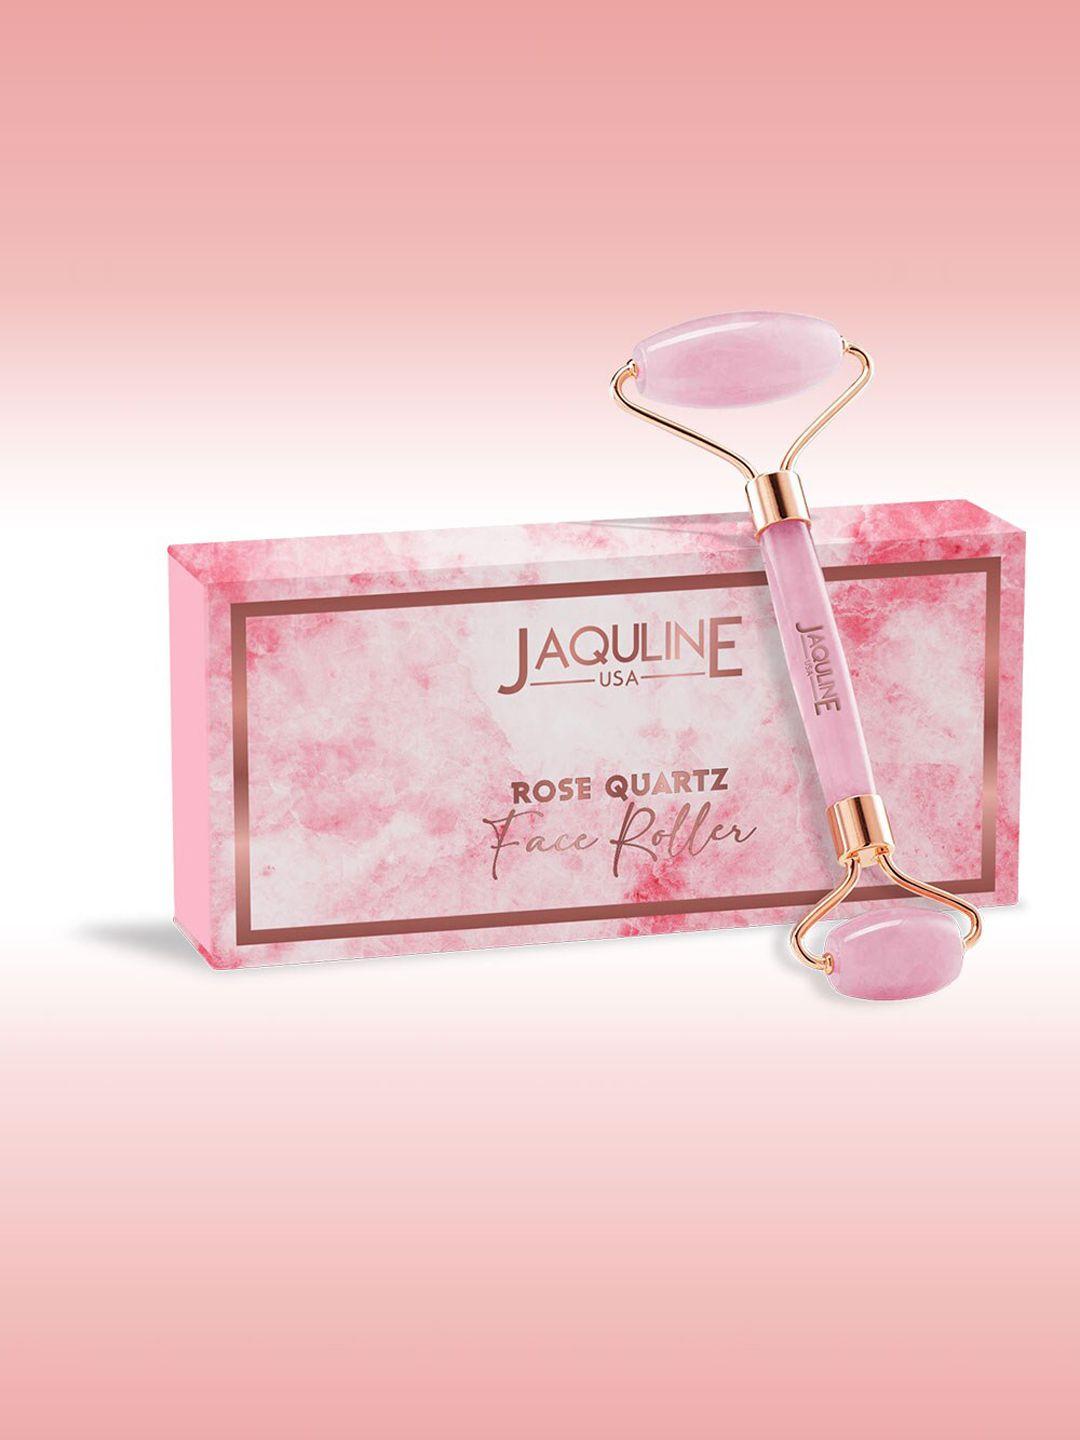 jaquline usa rose quartz jade face roller